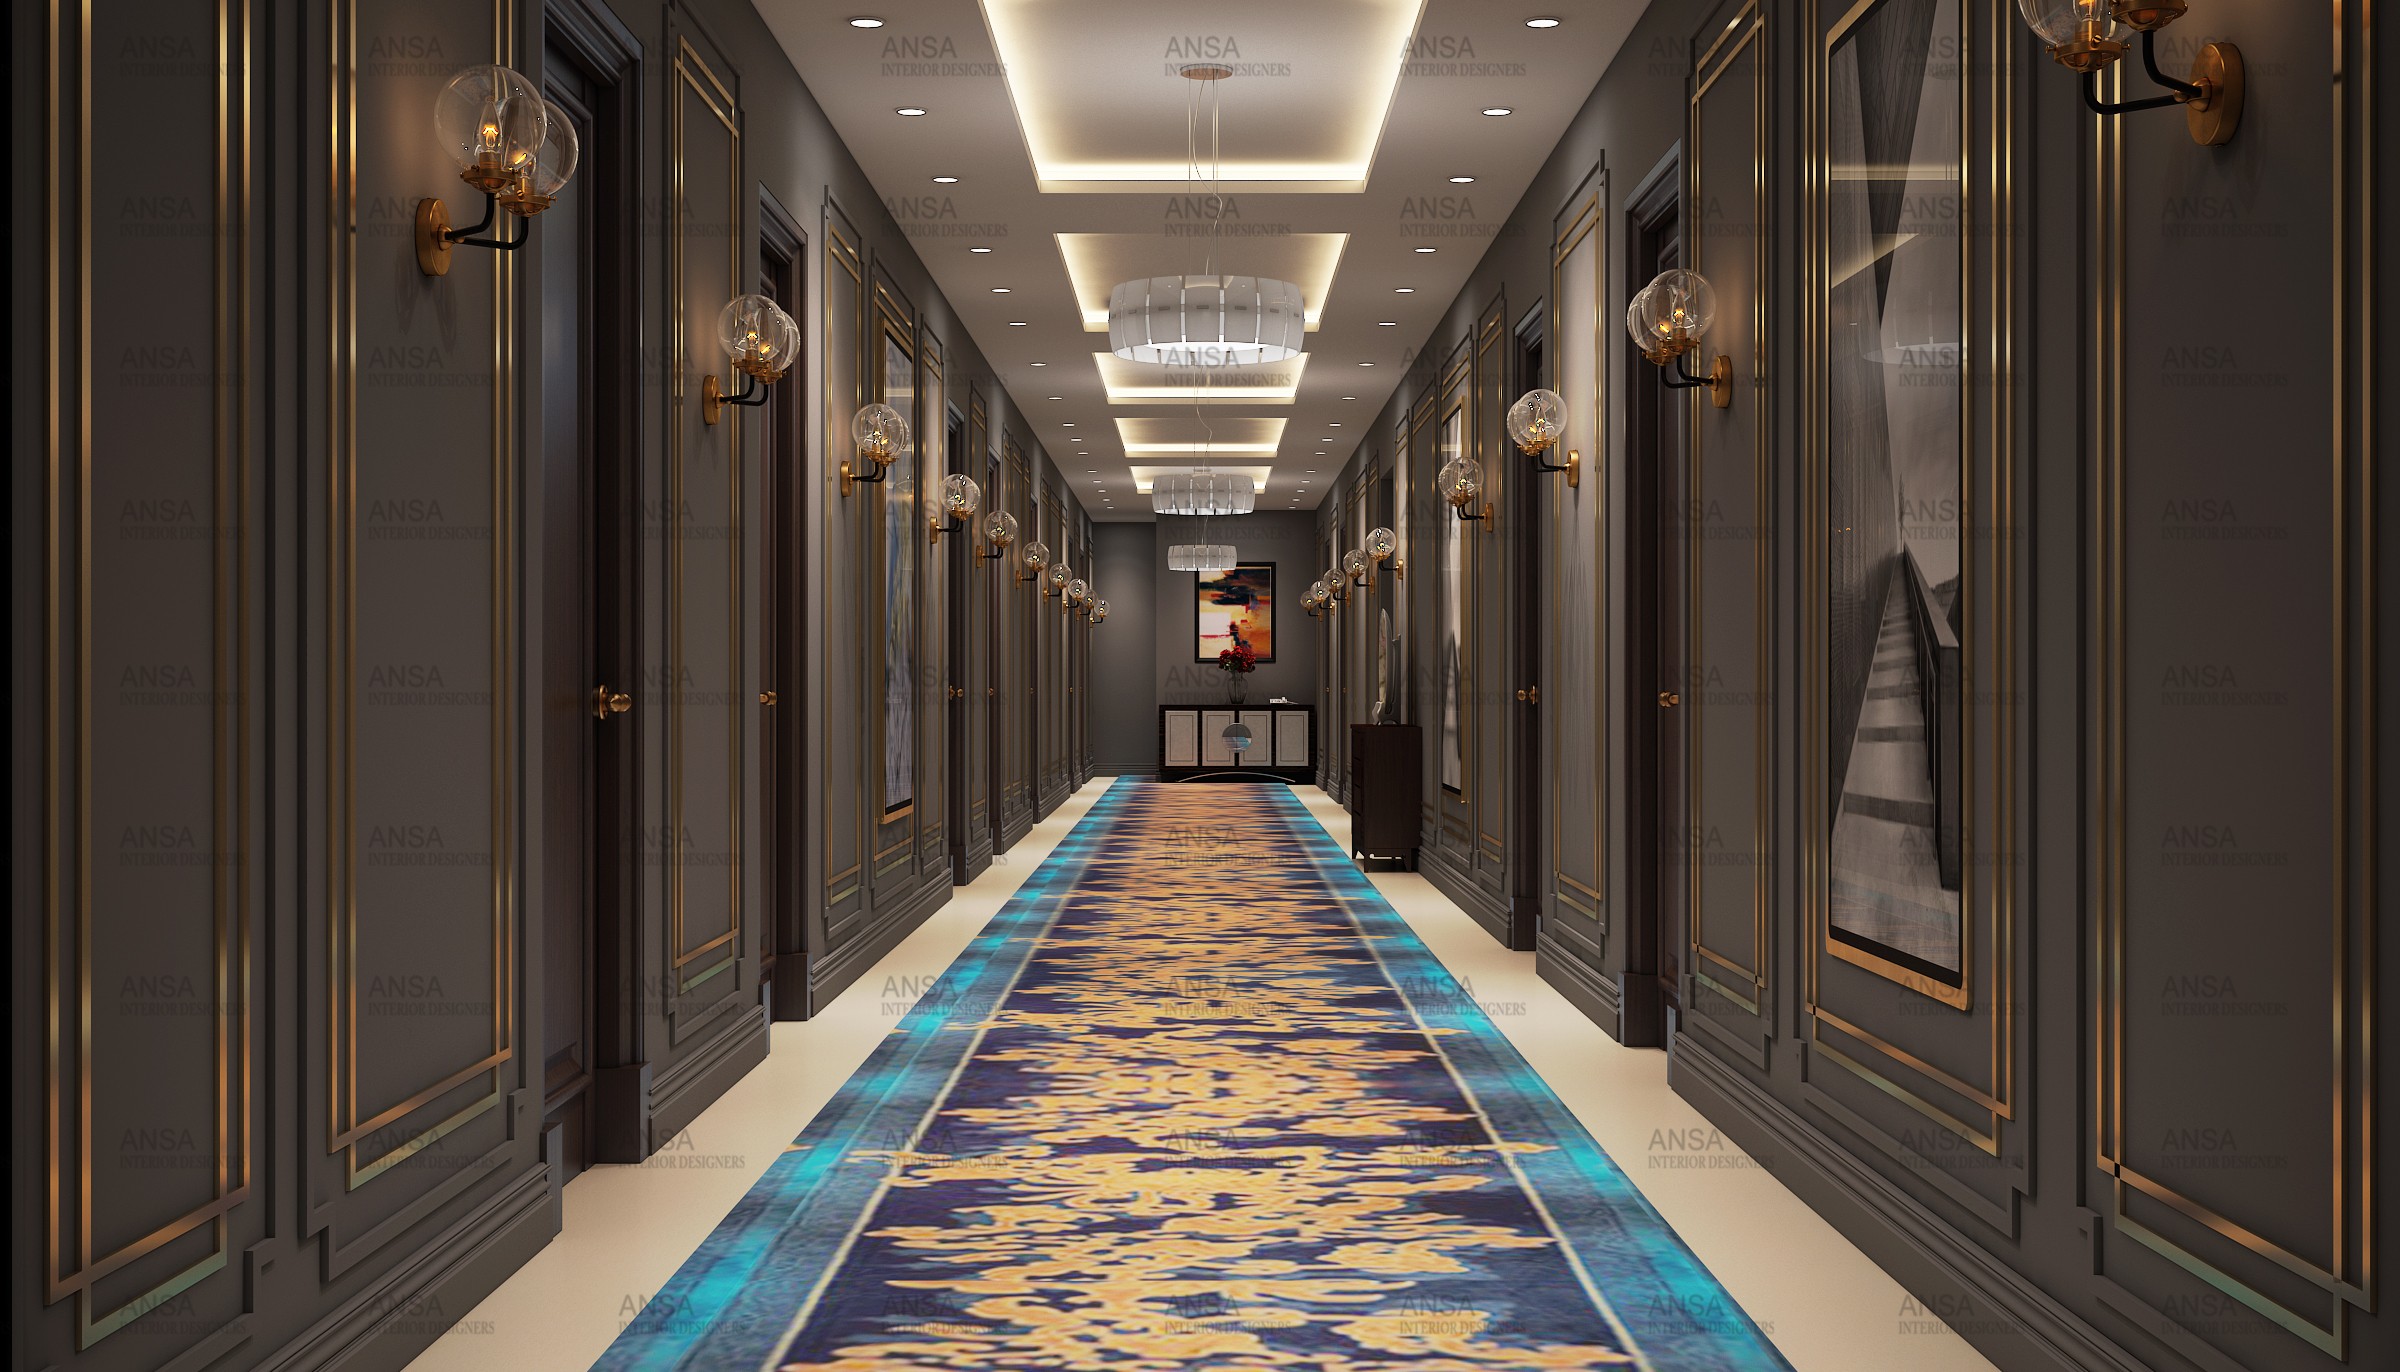 hotel interior design - The hallway of a hotel at nainital.